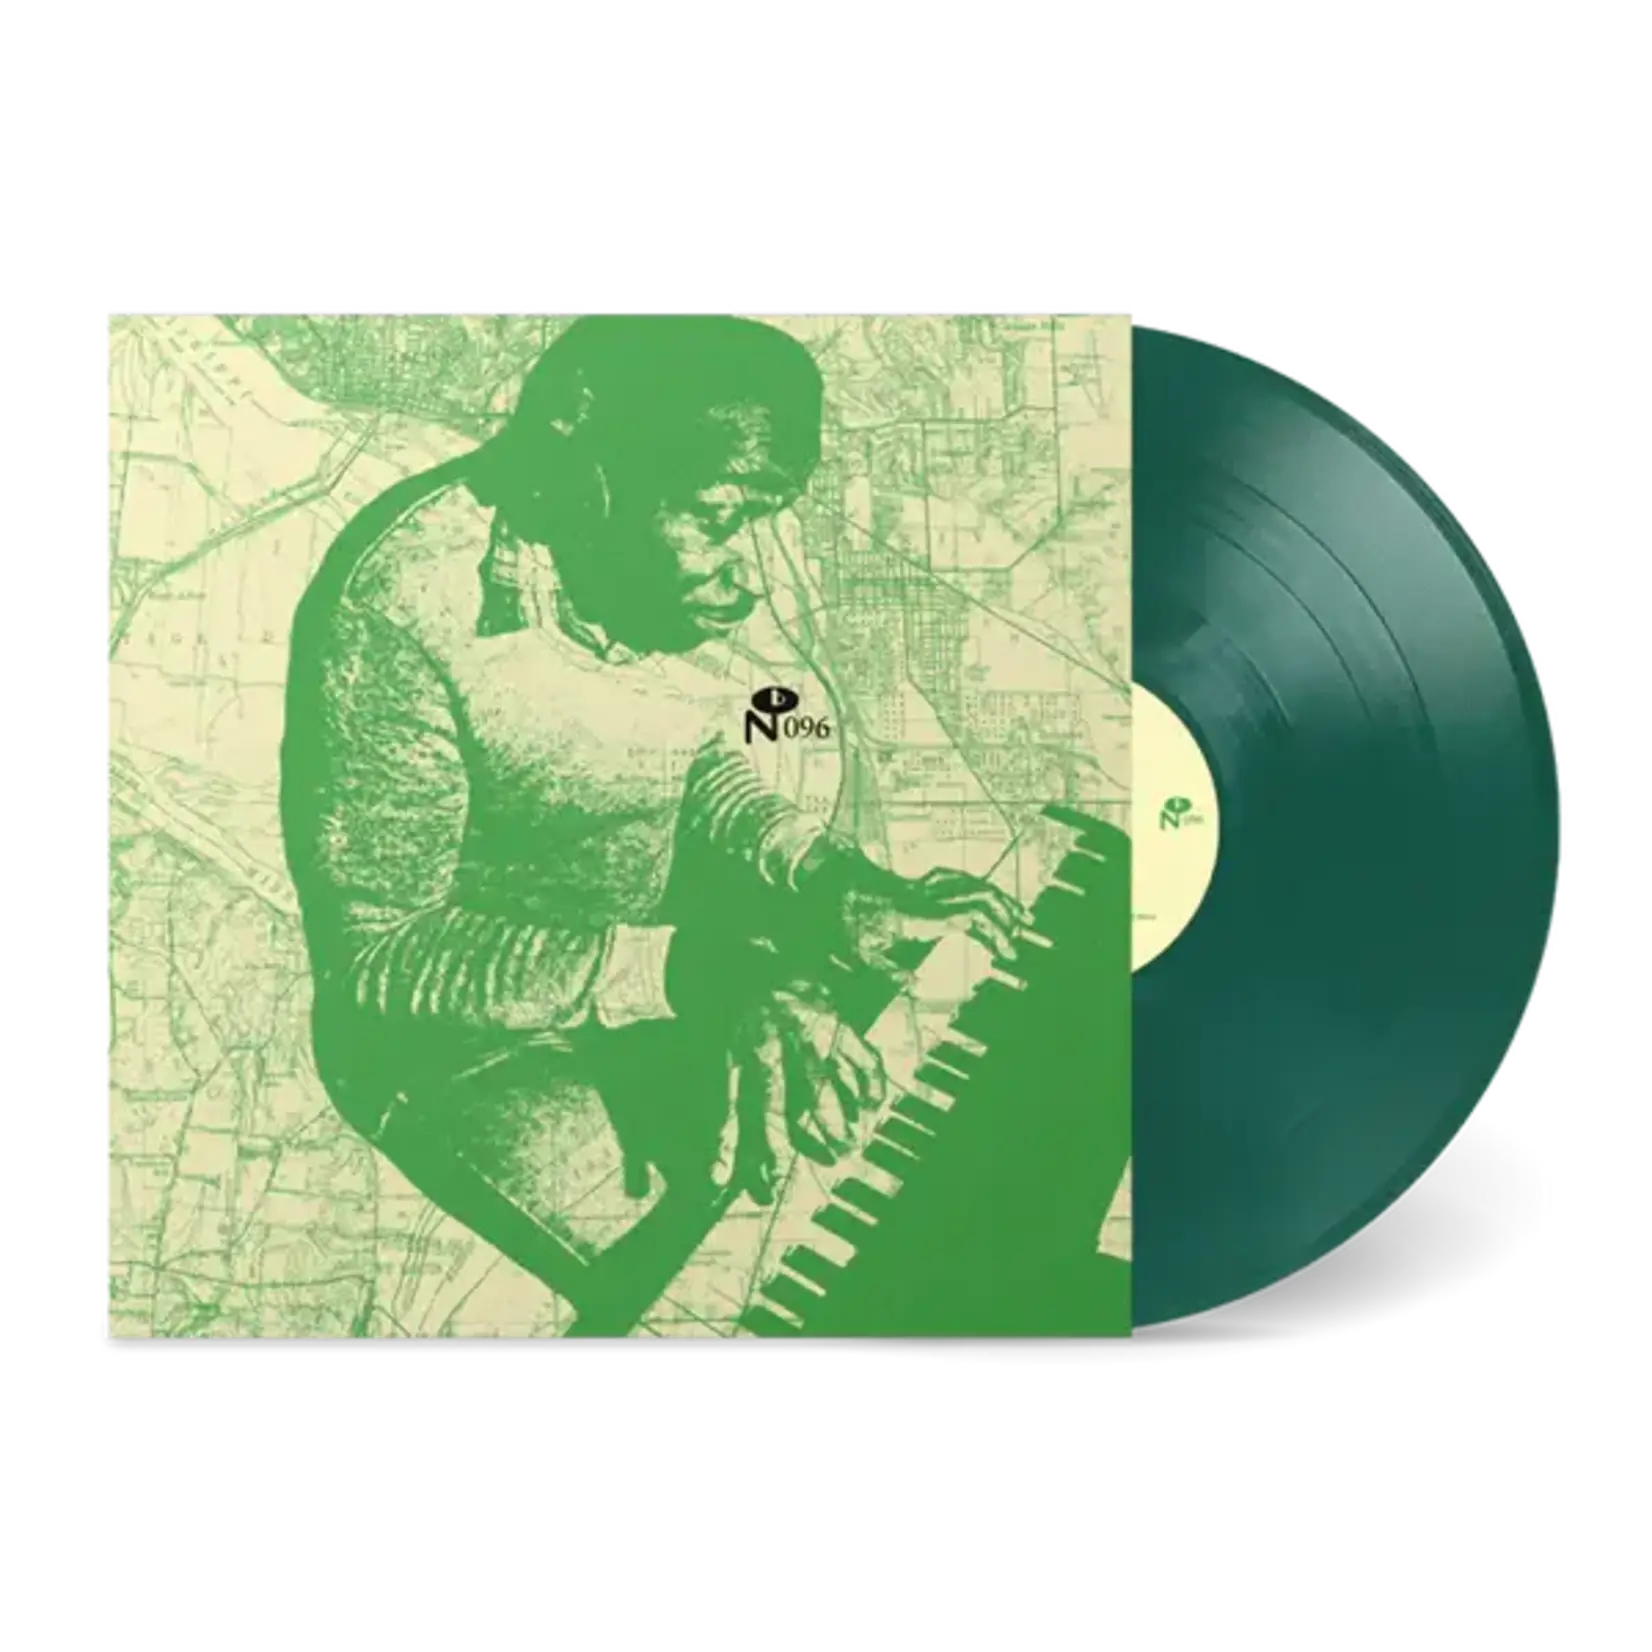 New] Various Artists: Eccentric Soul - The Shoestring Label (opaque dark  green vinyl) [NUMERO] - Kops Records